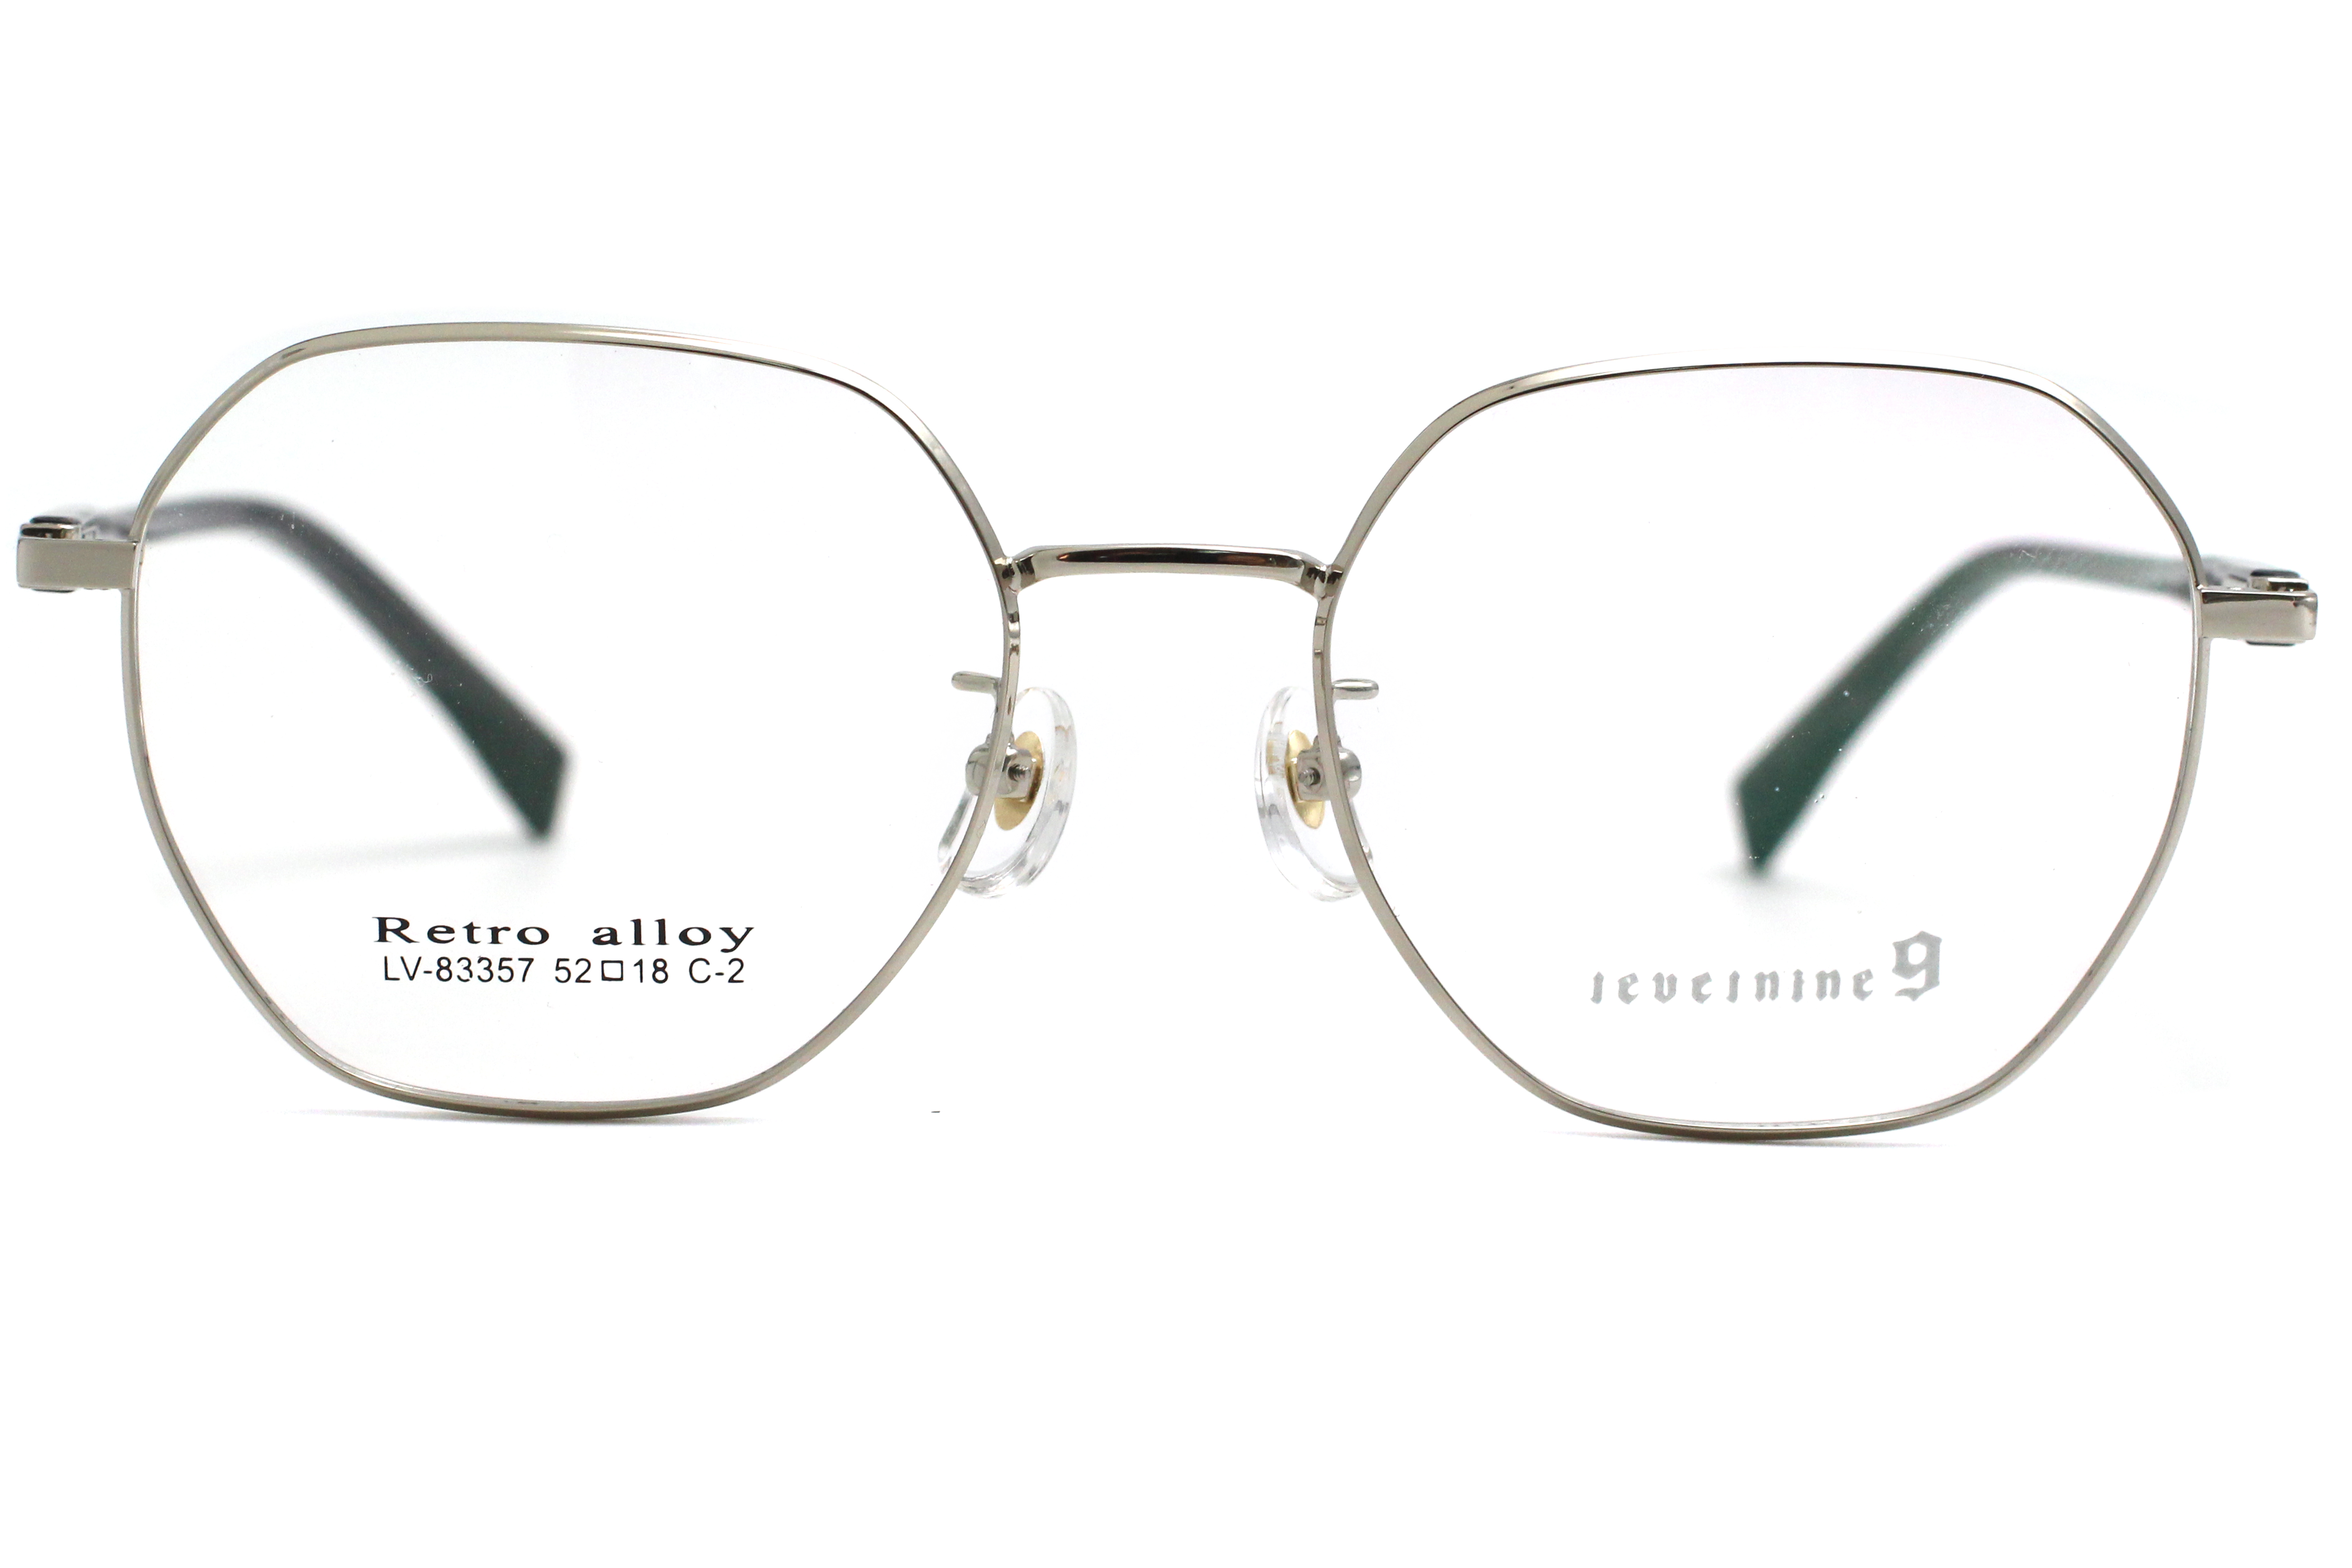 Wholesale Metal Glasses Frames 83357